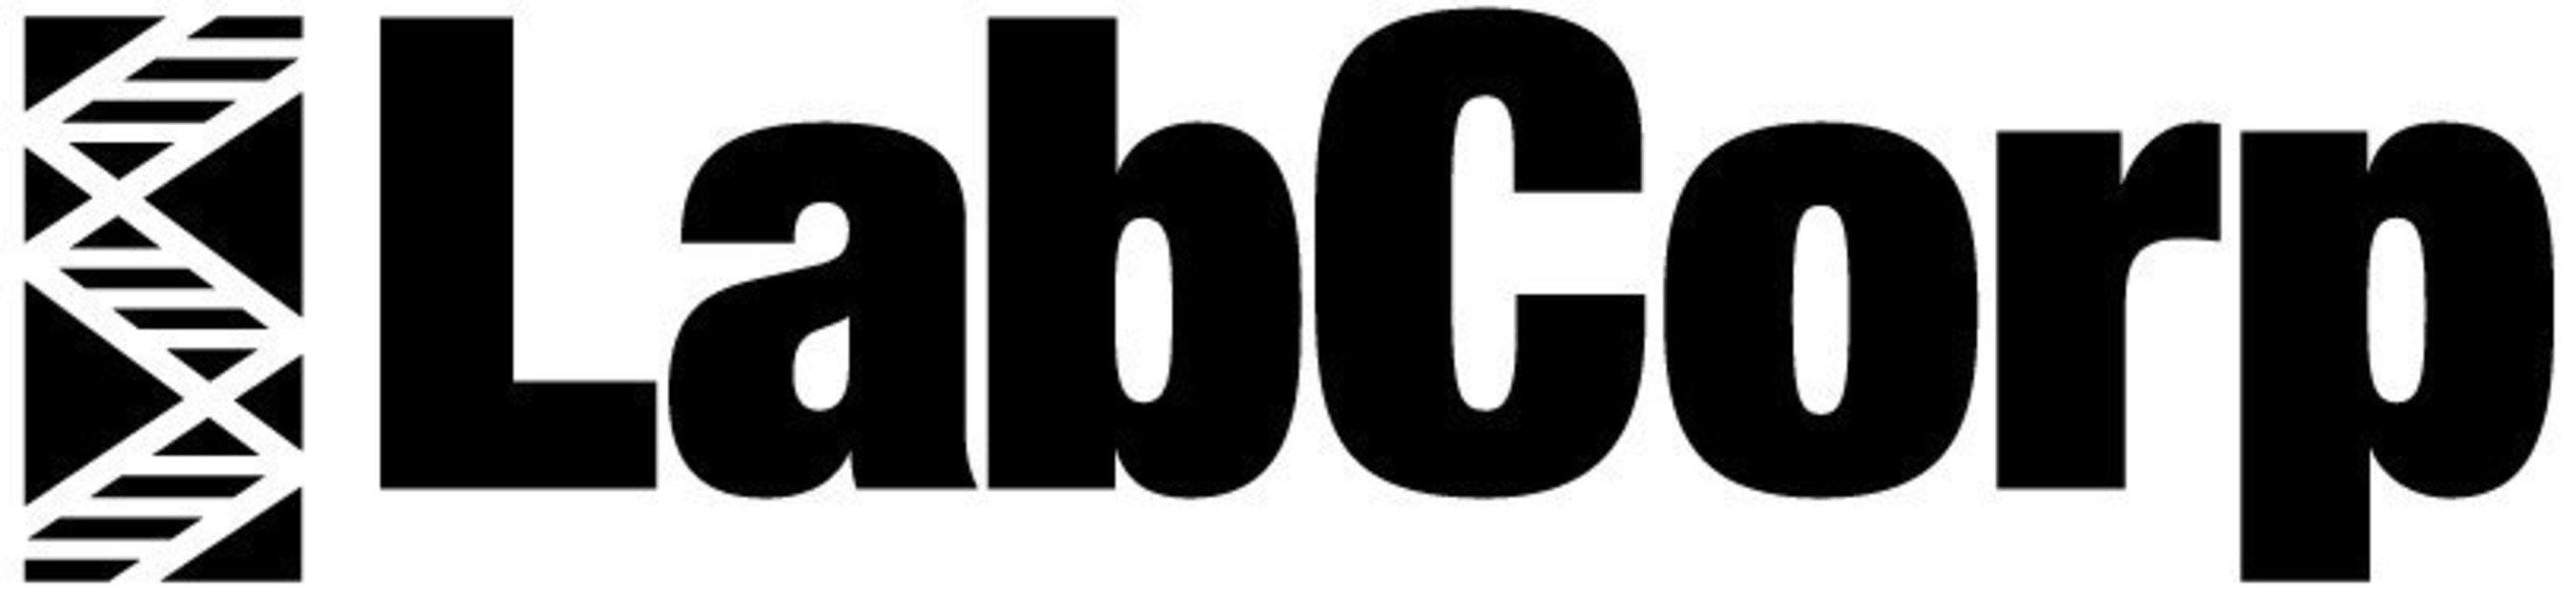 LabCorp Logo - LabCorp Announces Agreement To Acquire Sequenom